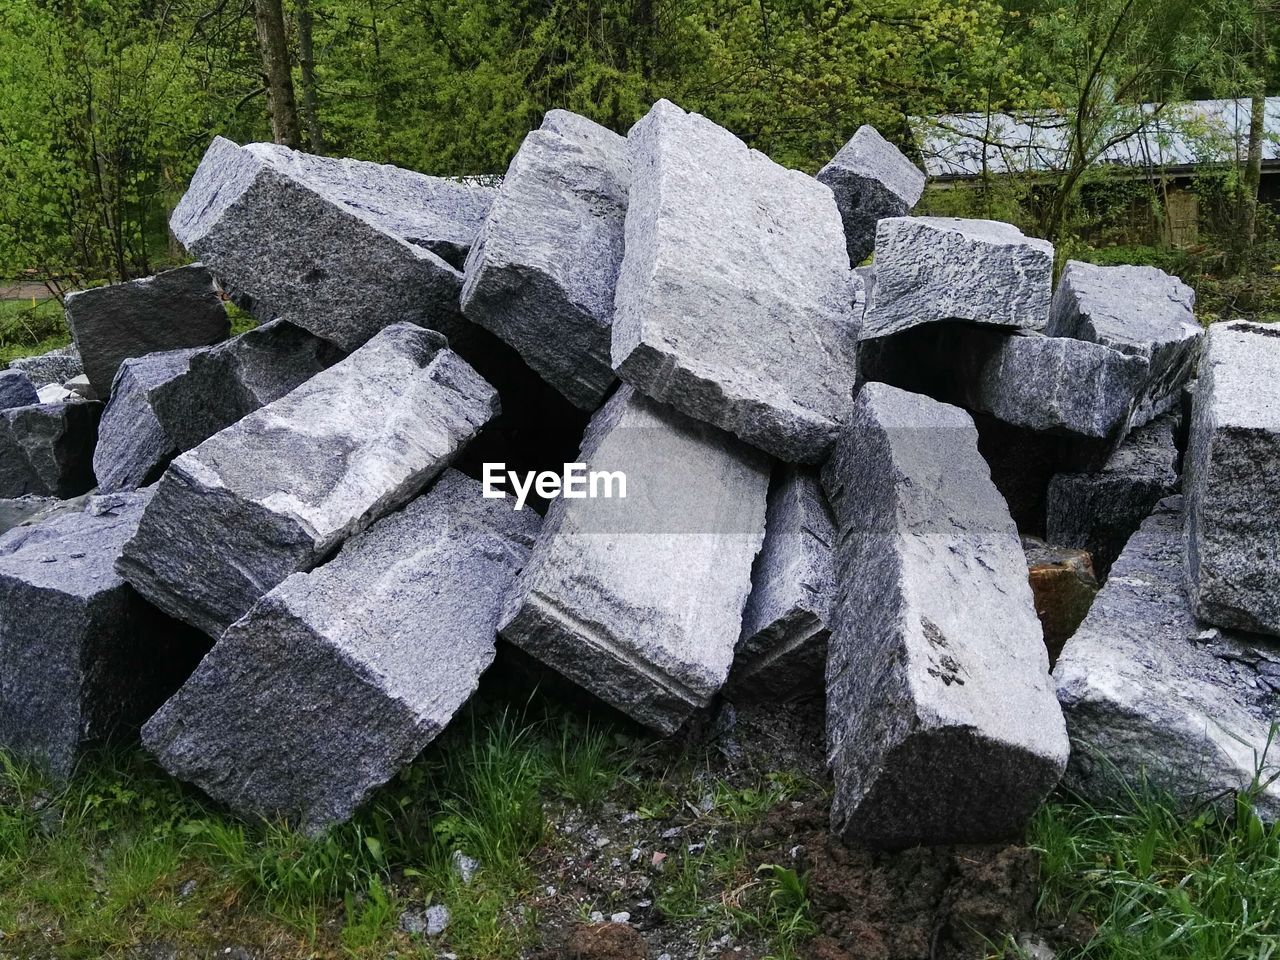 Stone stack on grassy field